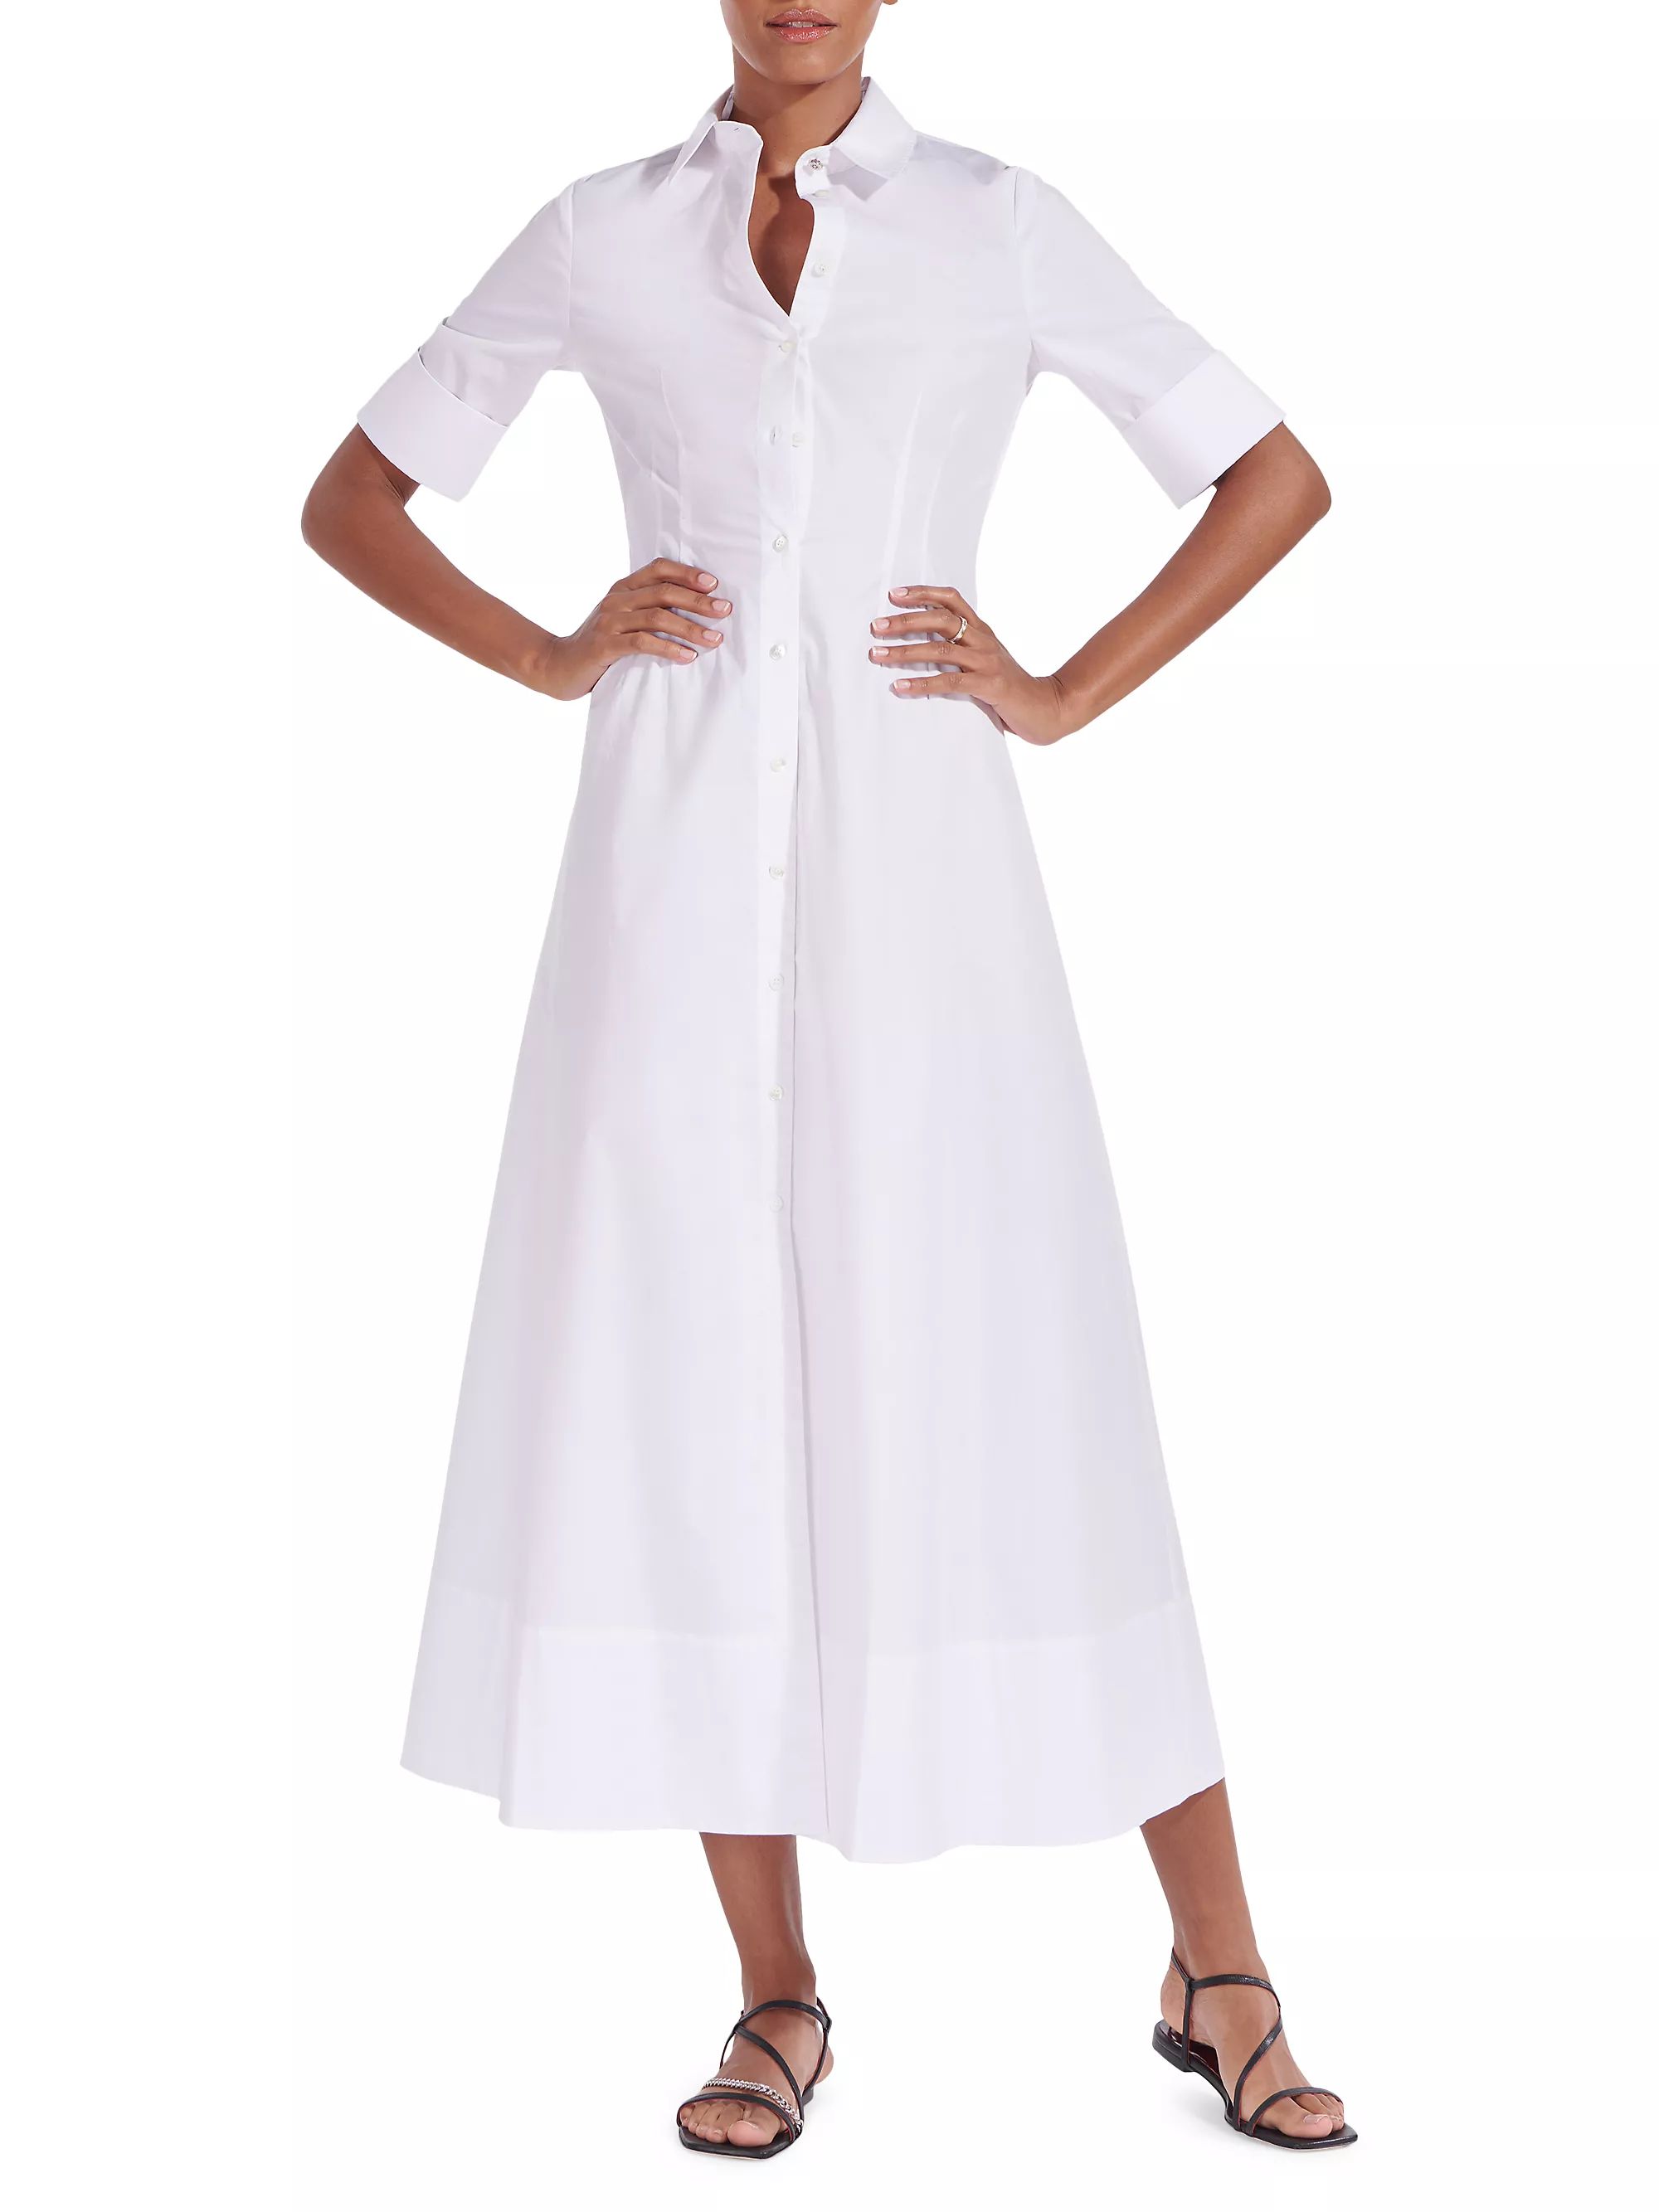 DressesDay & CasualStaudJoan Collared Maxi Shirtdress$325 | Saks Fifth Avenue